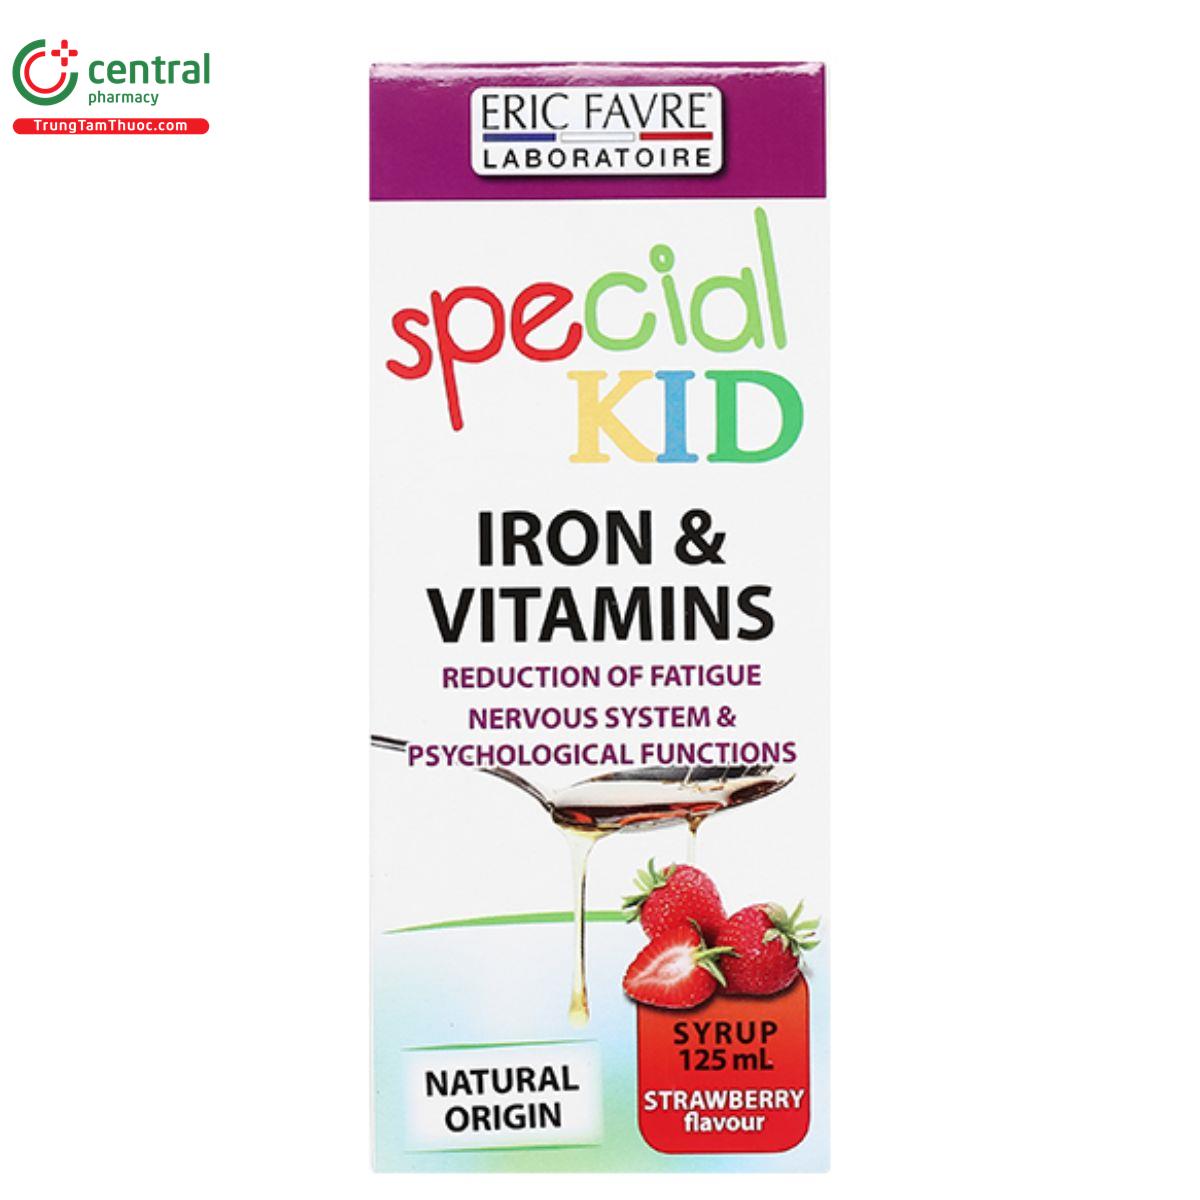 special kid fer et vitamines 7 H2517